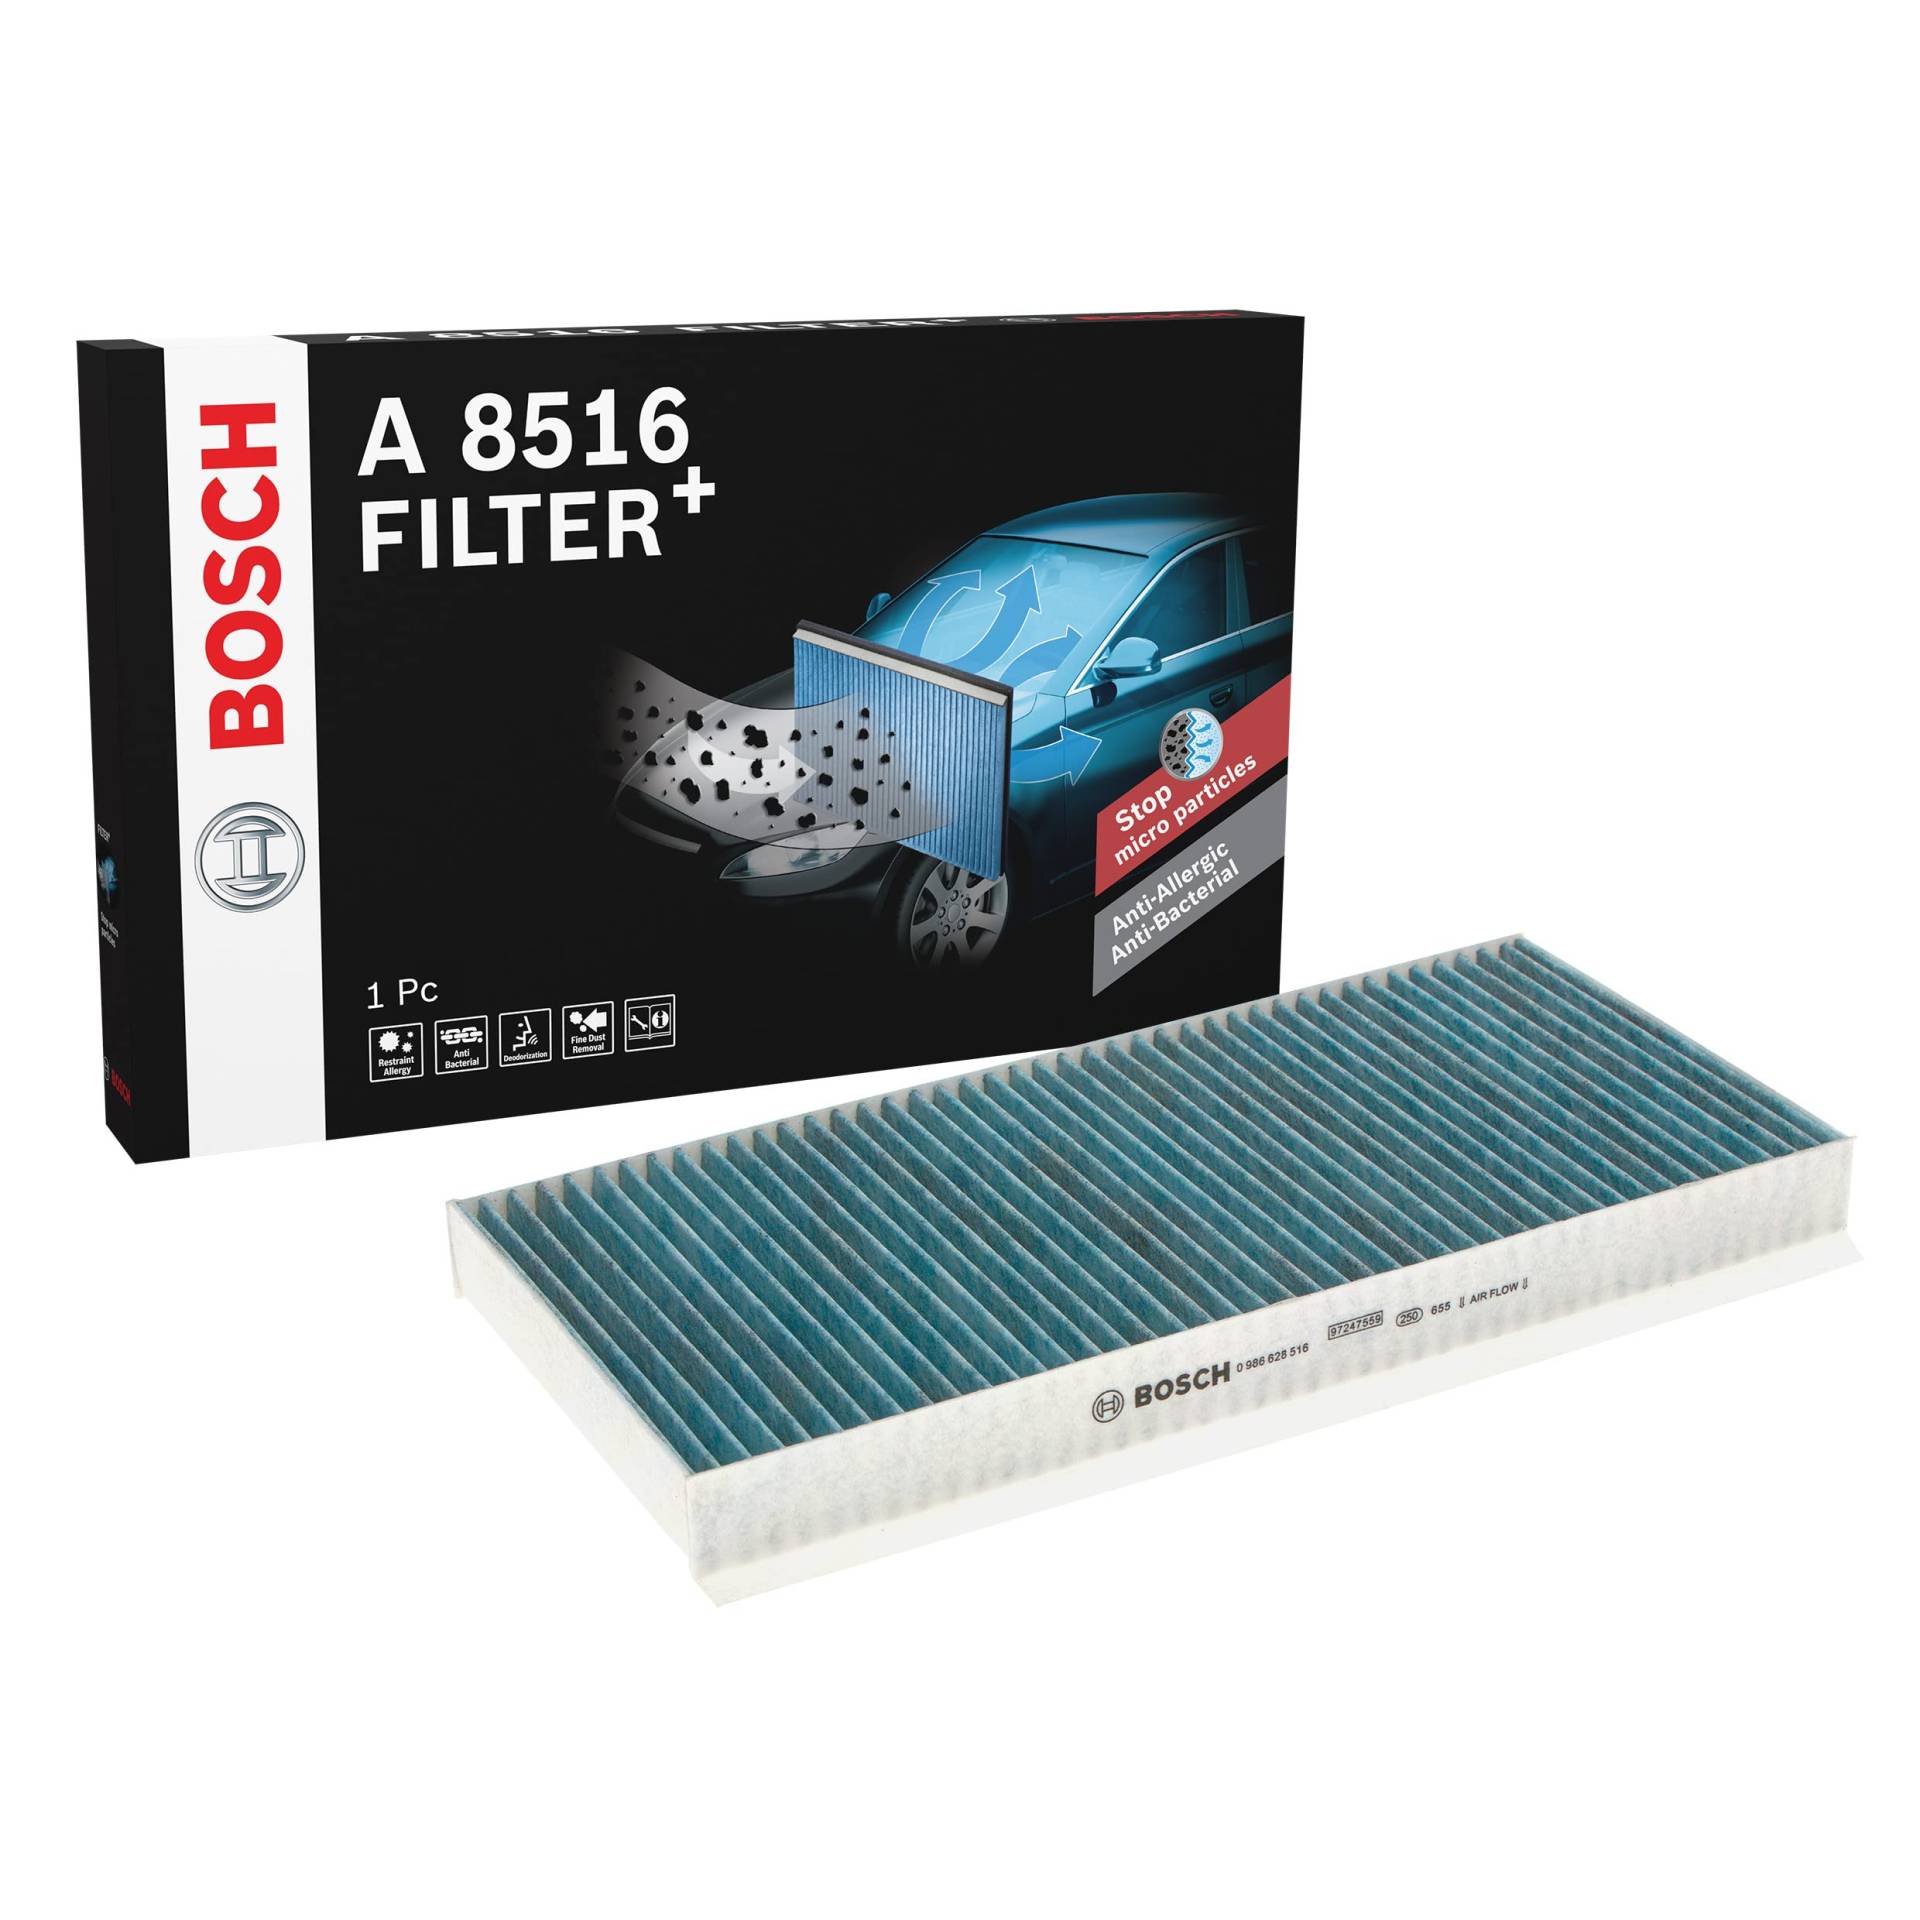 Bosch A8516 - Innenraumfilter Filter+ von Bosch Automotive